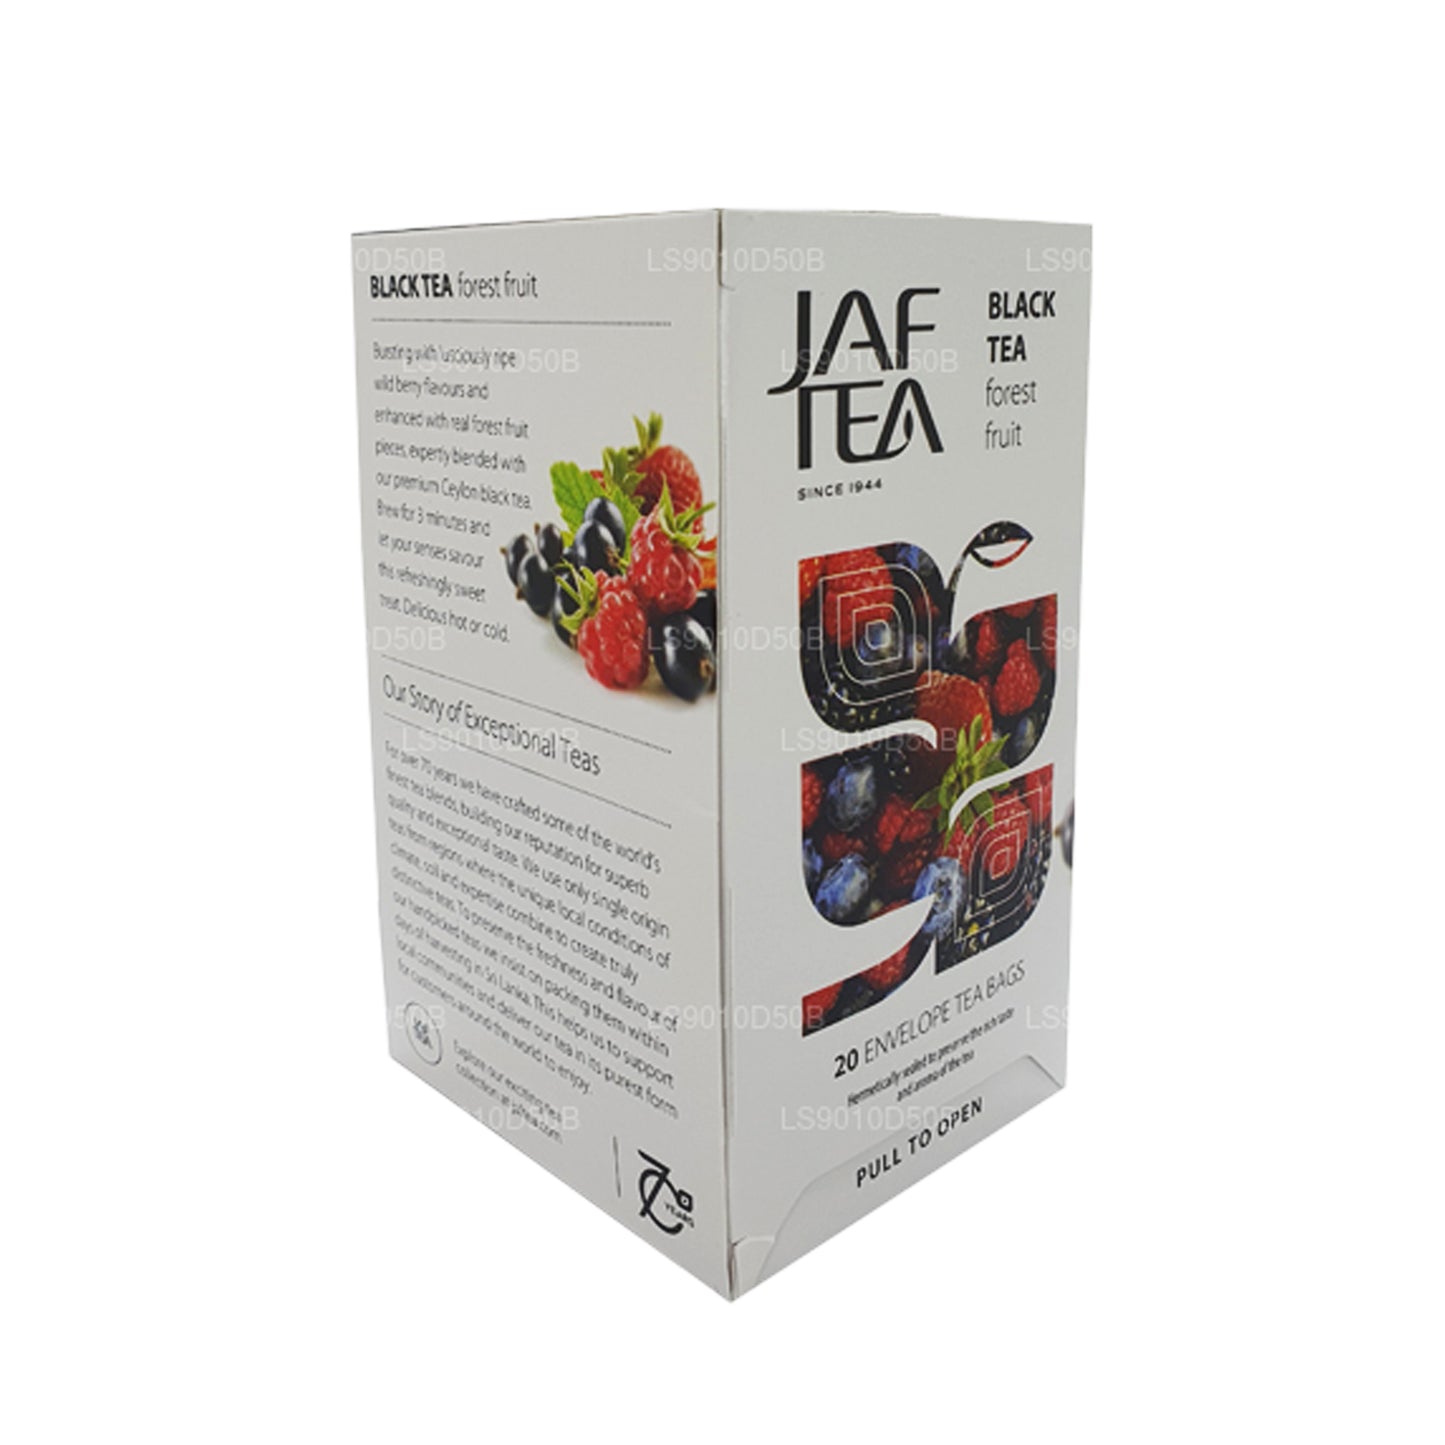 Jaf Tea Pure Fruits Collection Black Tea Forest Fruit (30 g) 20 theezakjes